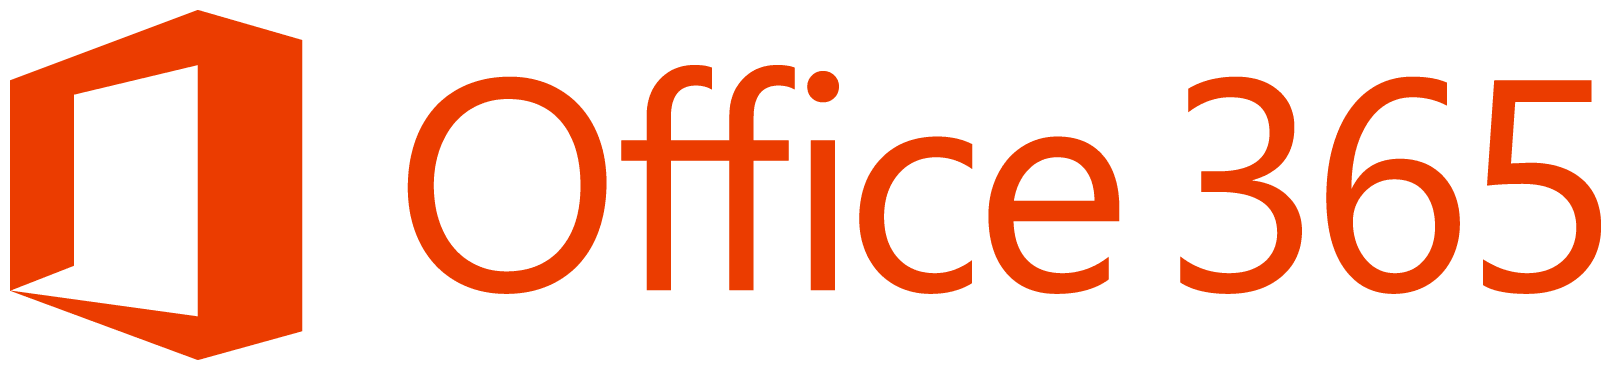 Microsoft's Office 365 Provider in Bangladesh